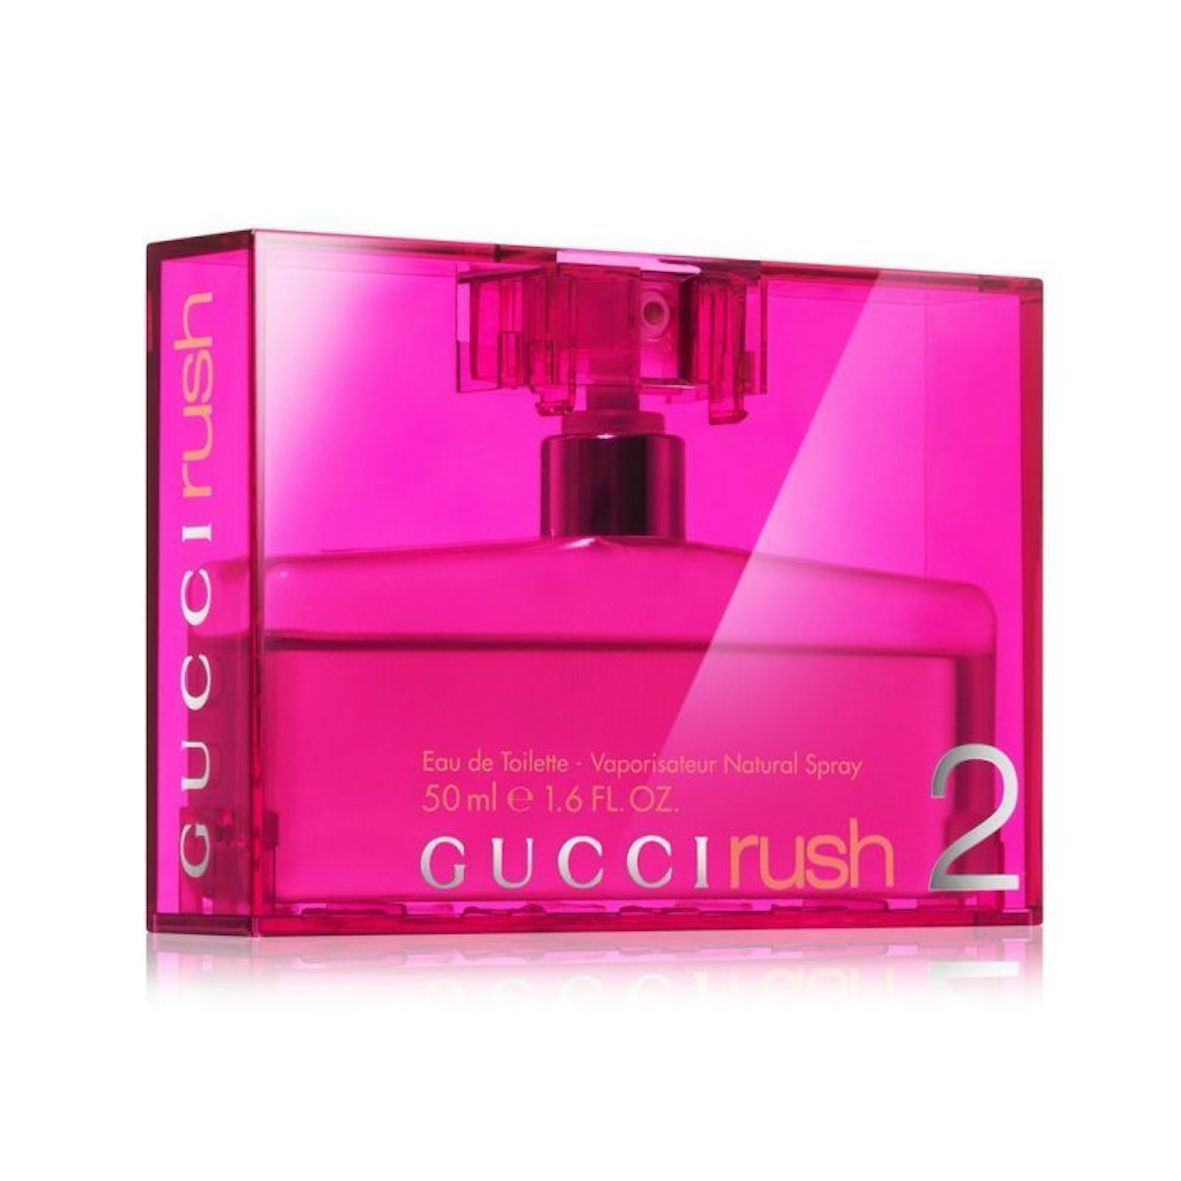 Marcolinia | Buy Gucci Rush 2 for Women Eau de Toilette 50mL online